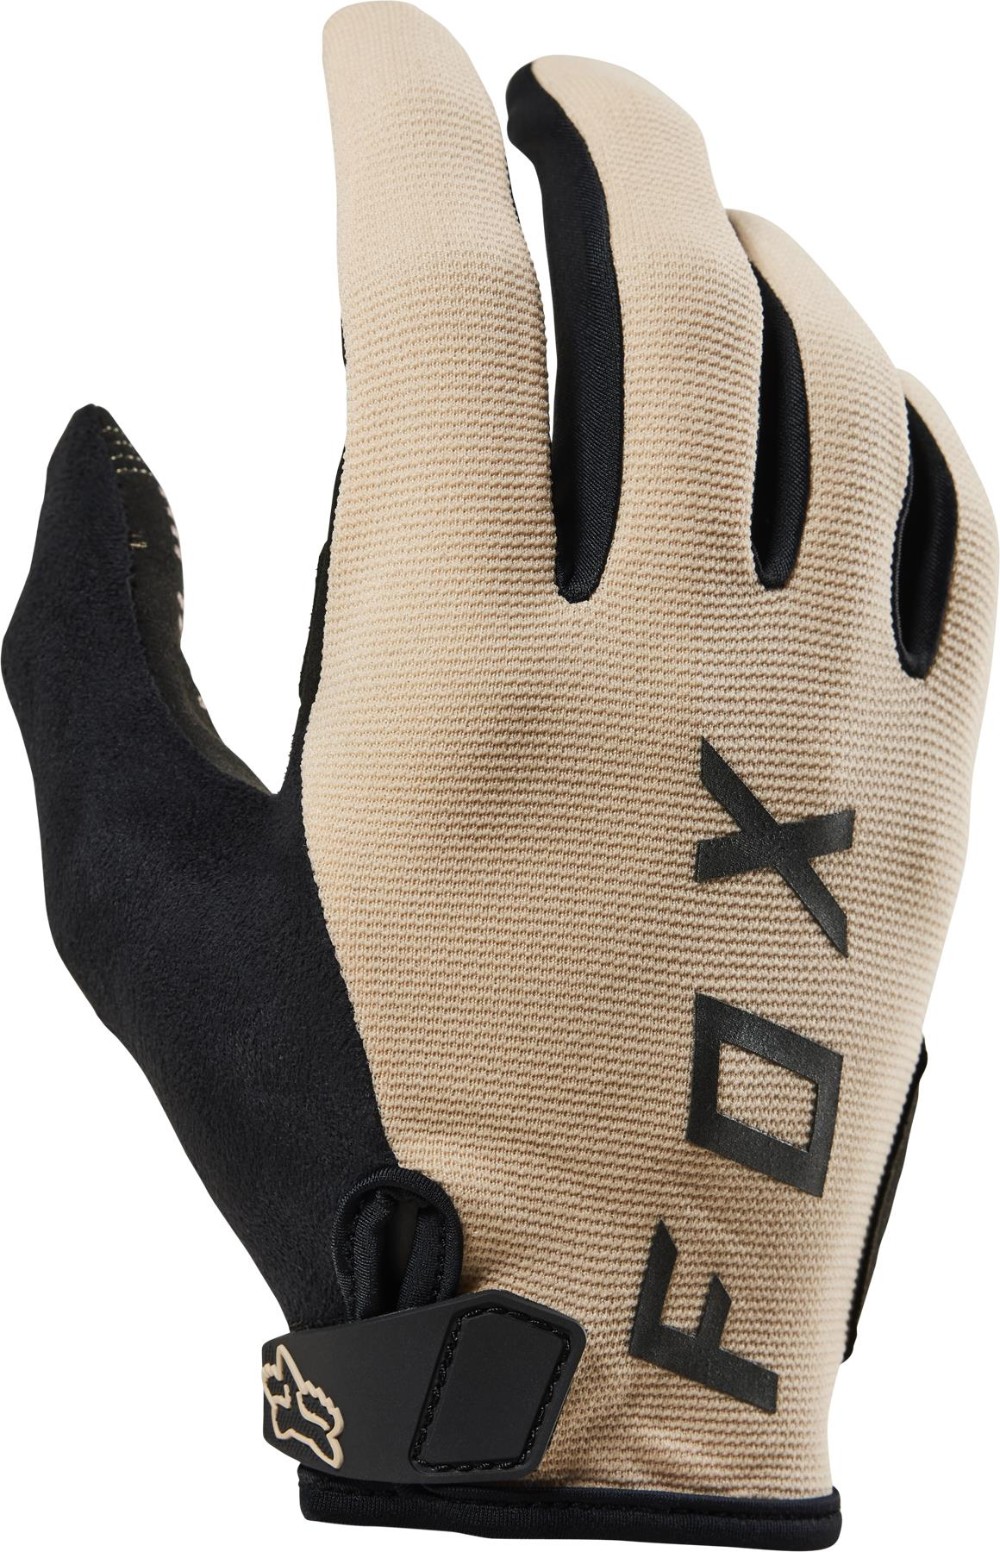 Ranger Gel Long Finger MTB Cycling Gloves image 0